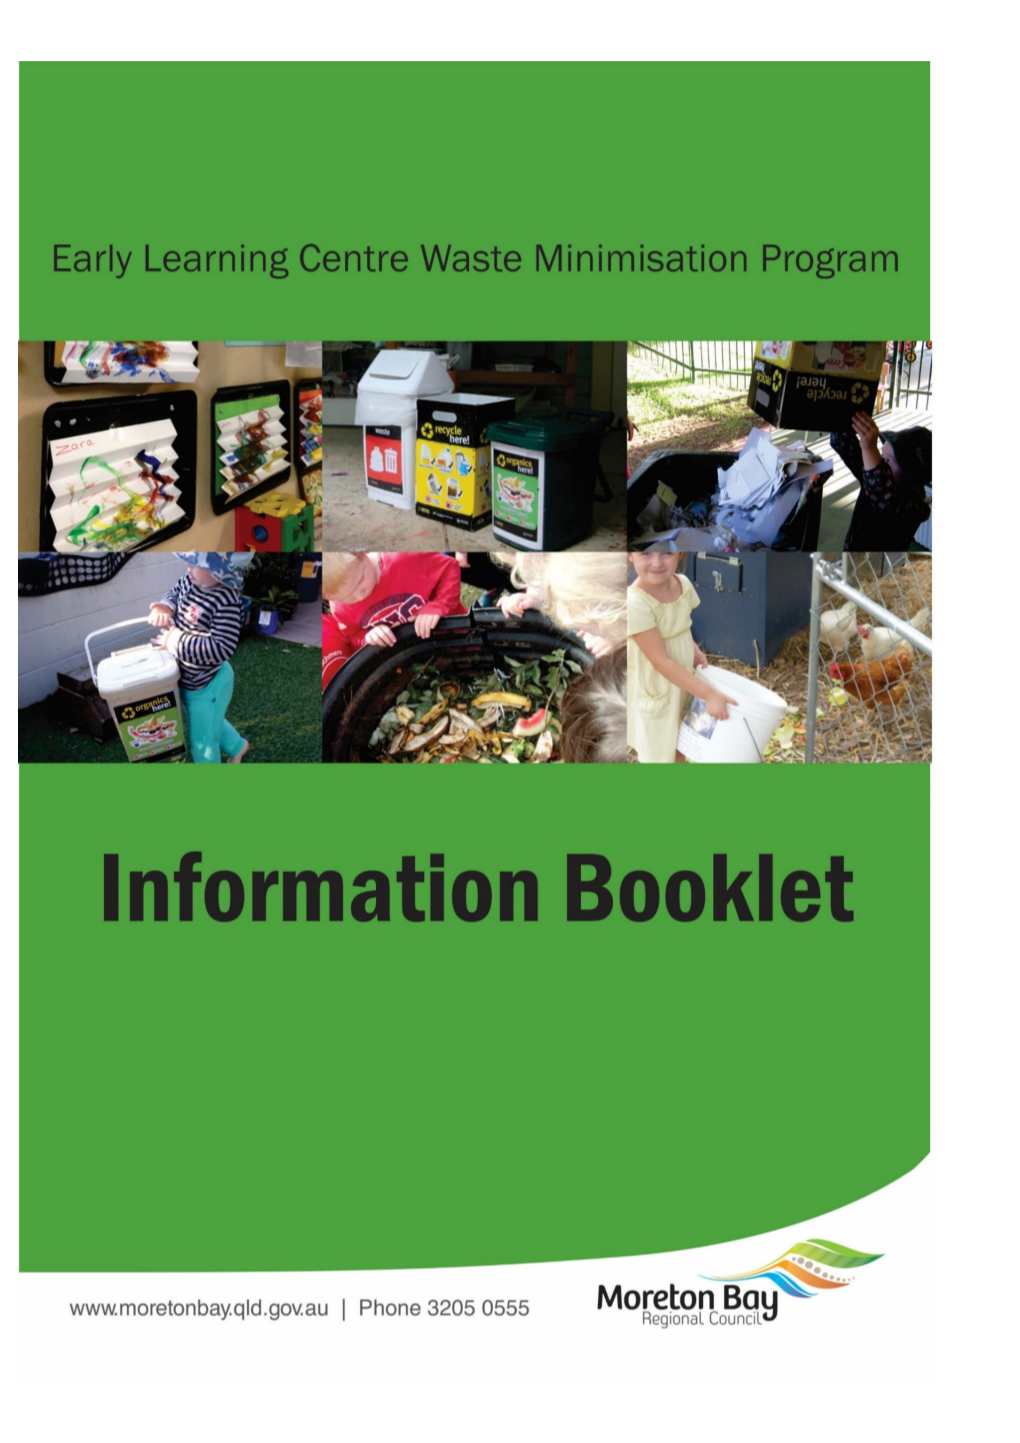 Early Learning Centre Waste Minimisation Program Information Booklet